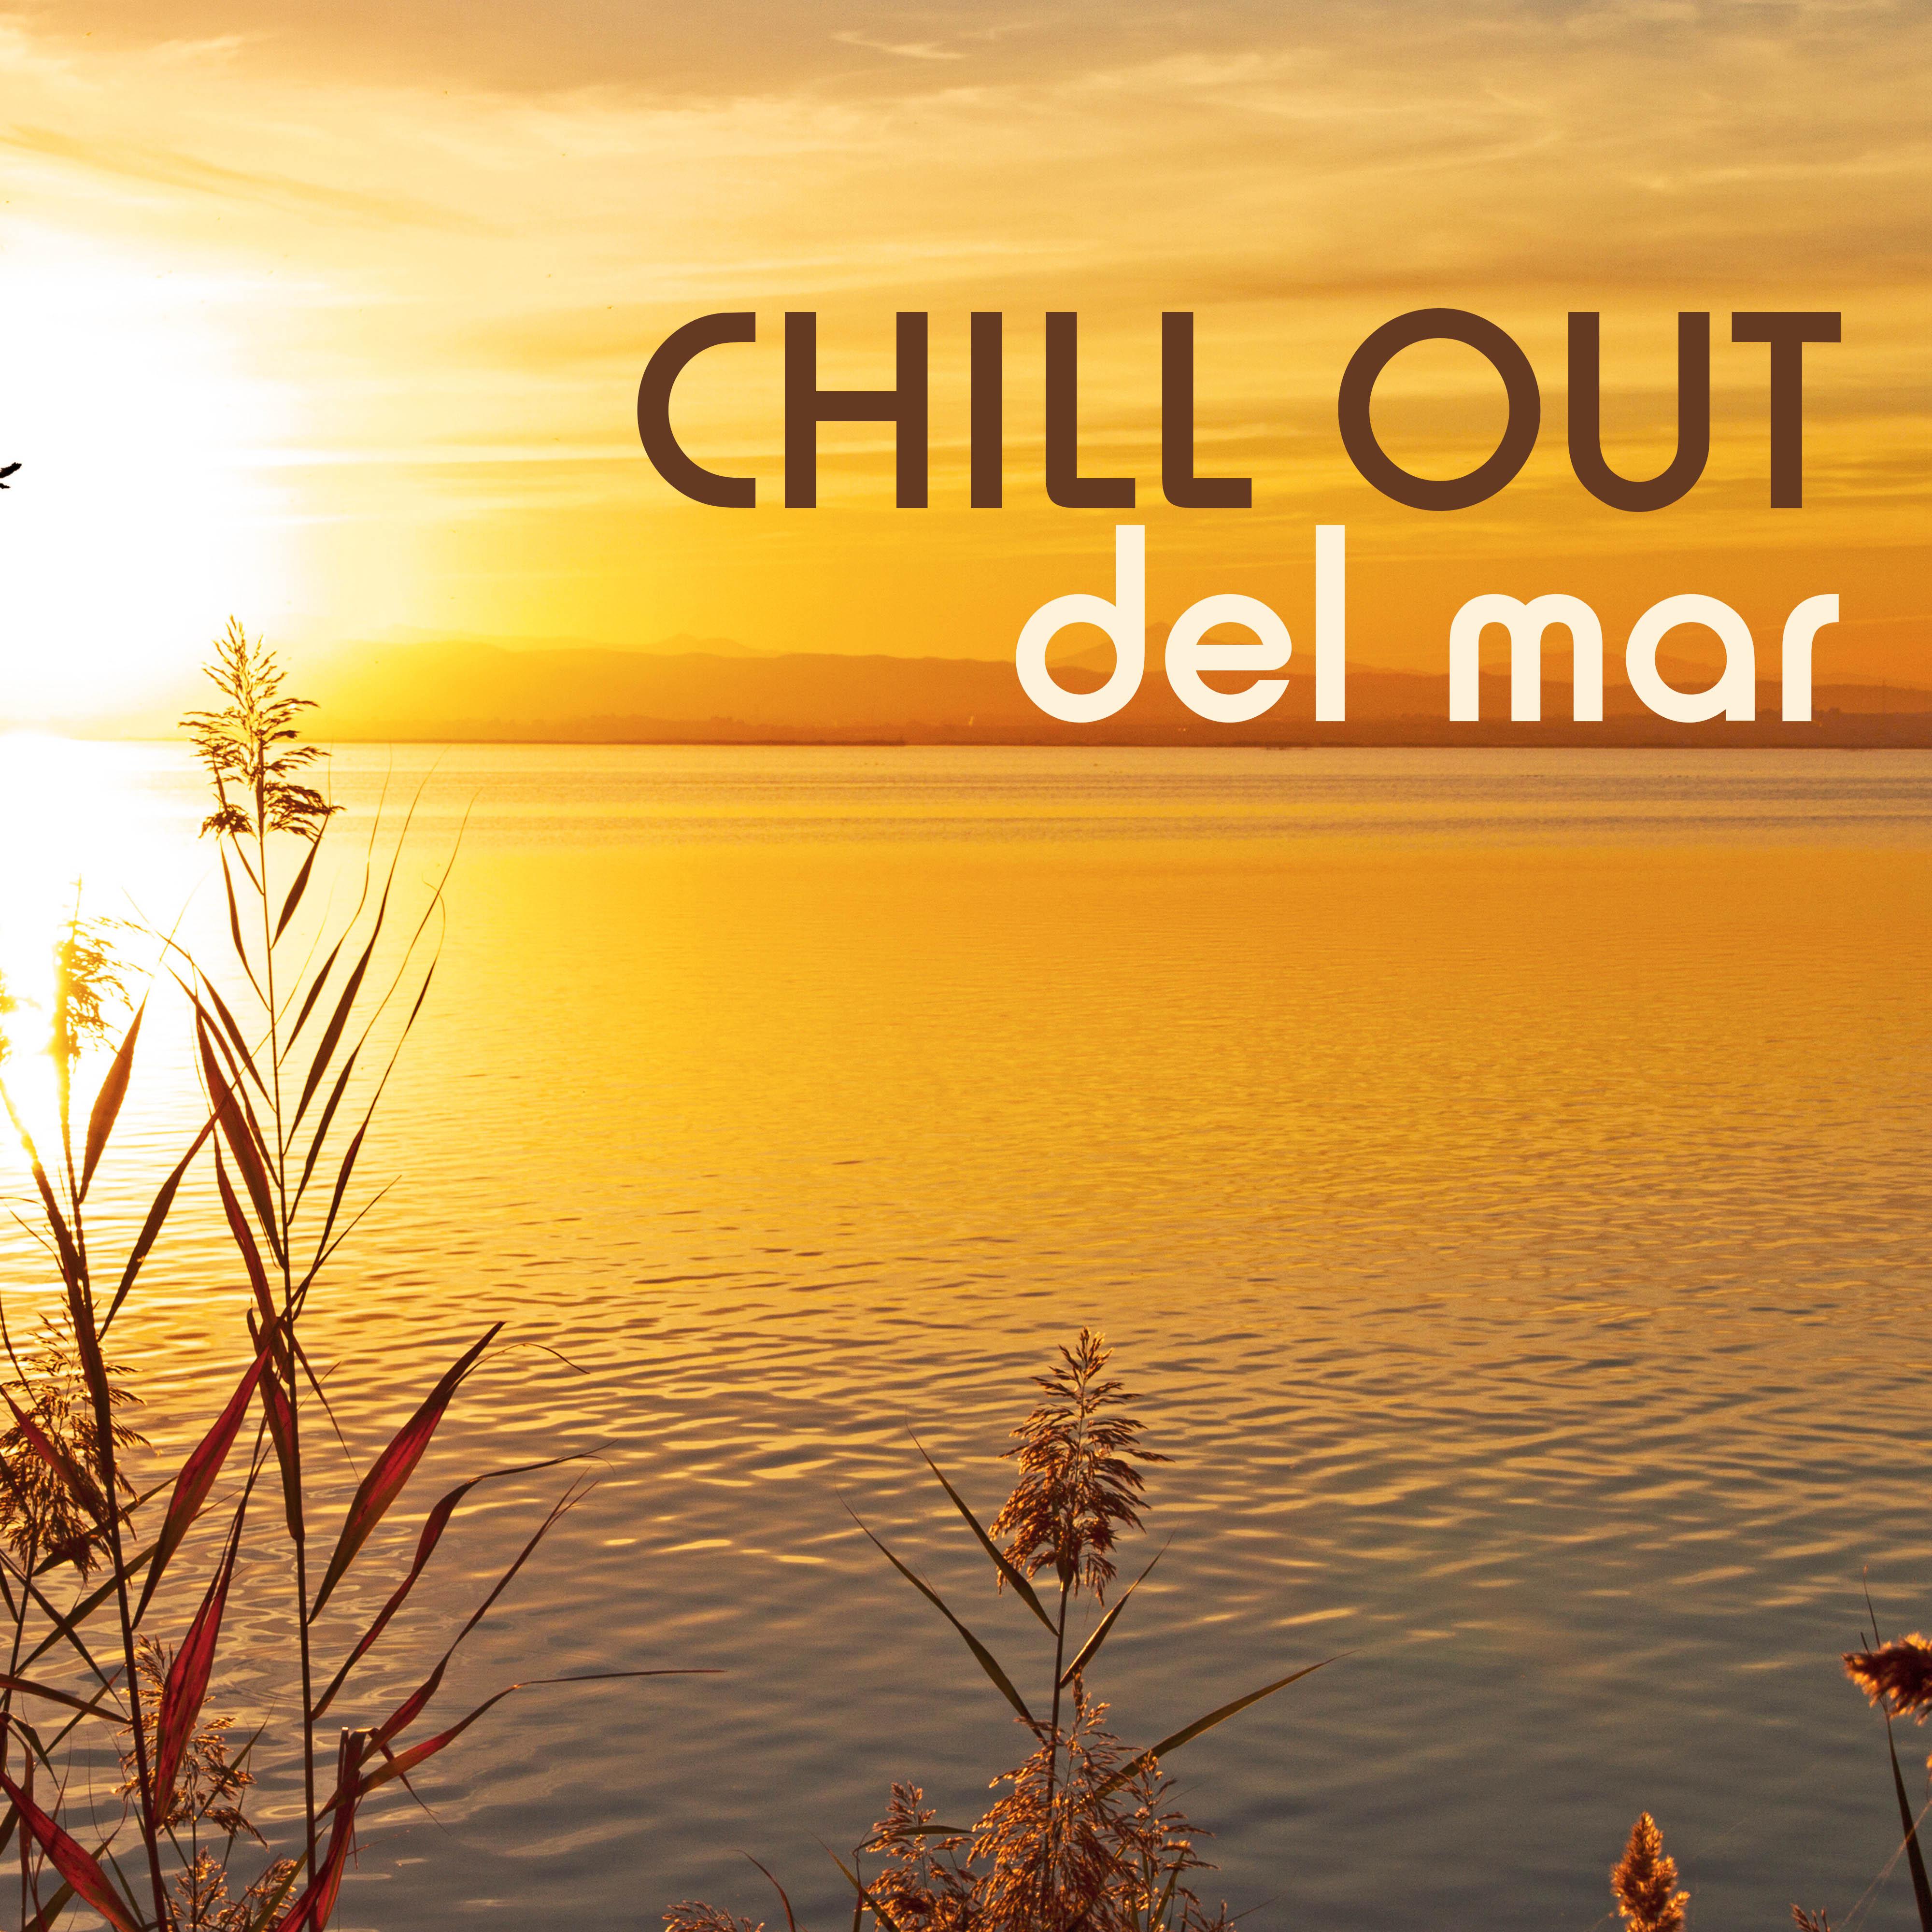 Chill Out del Mar - Fitness Aerobics, Pilates & Yoga Music